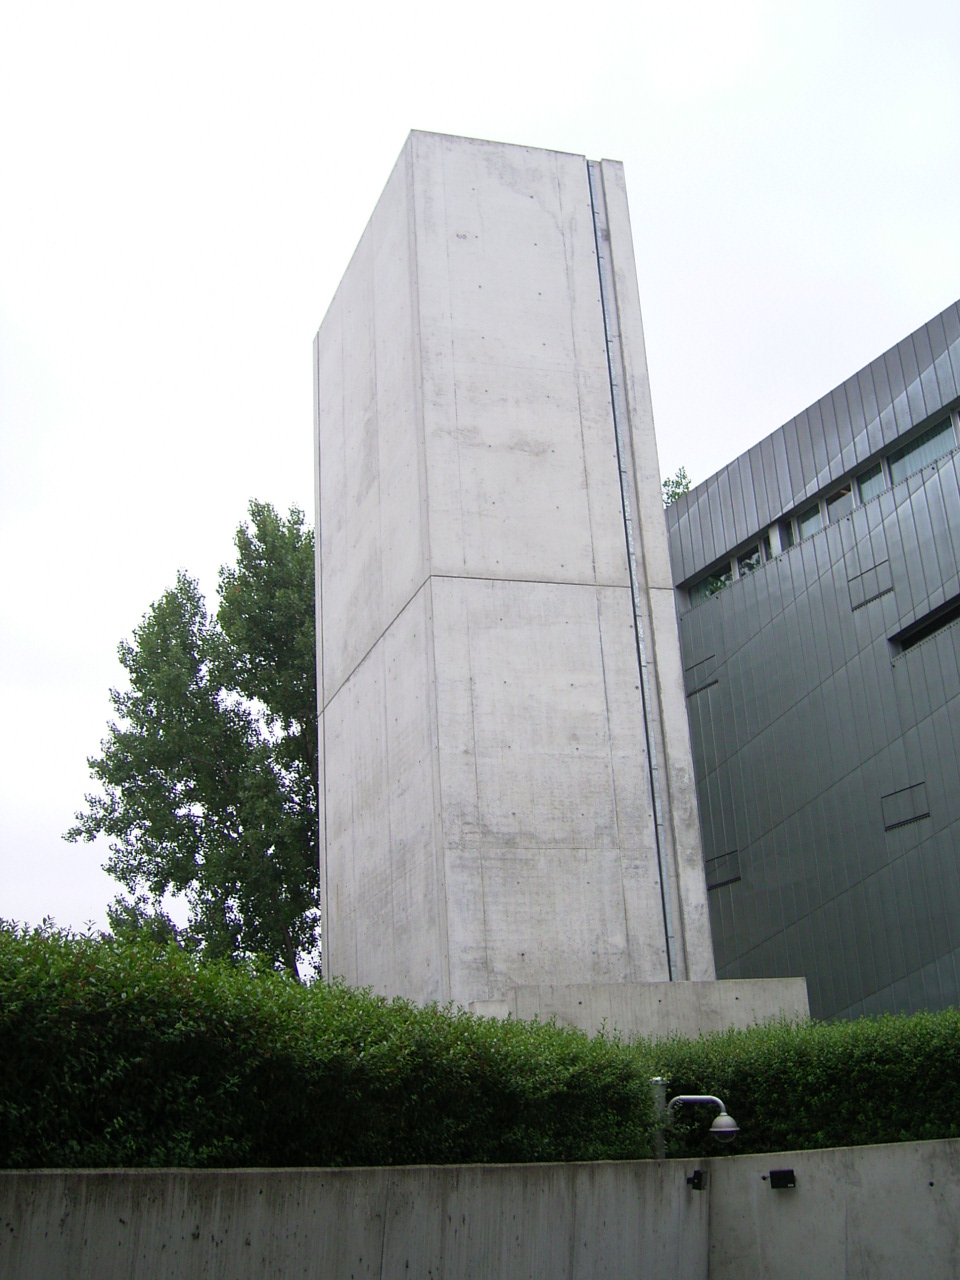 Turm des Holocaust jüdisches museum berlin jewish museum berlin 3